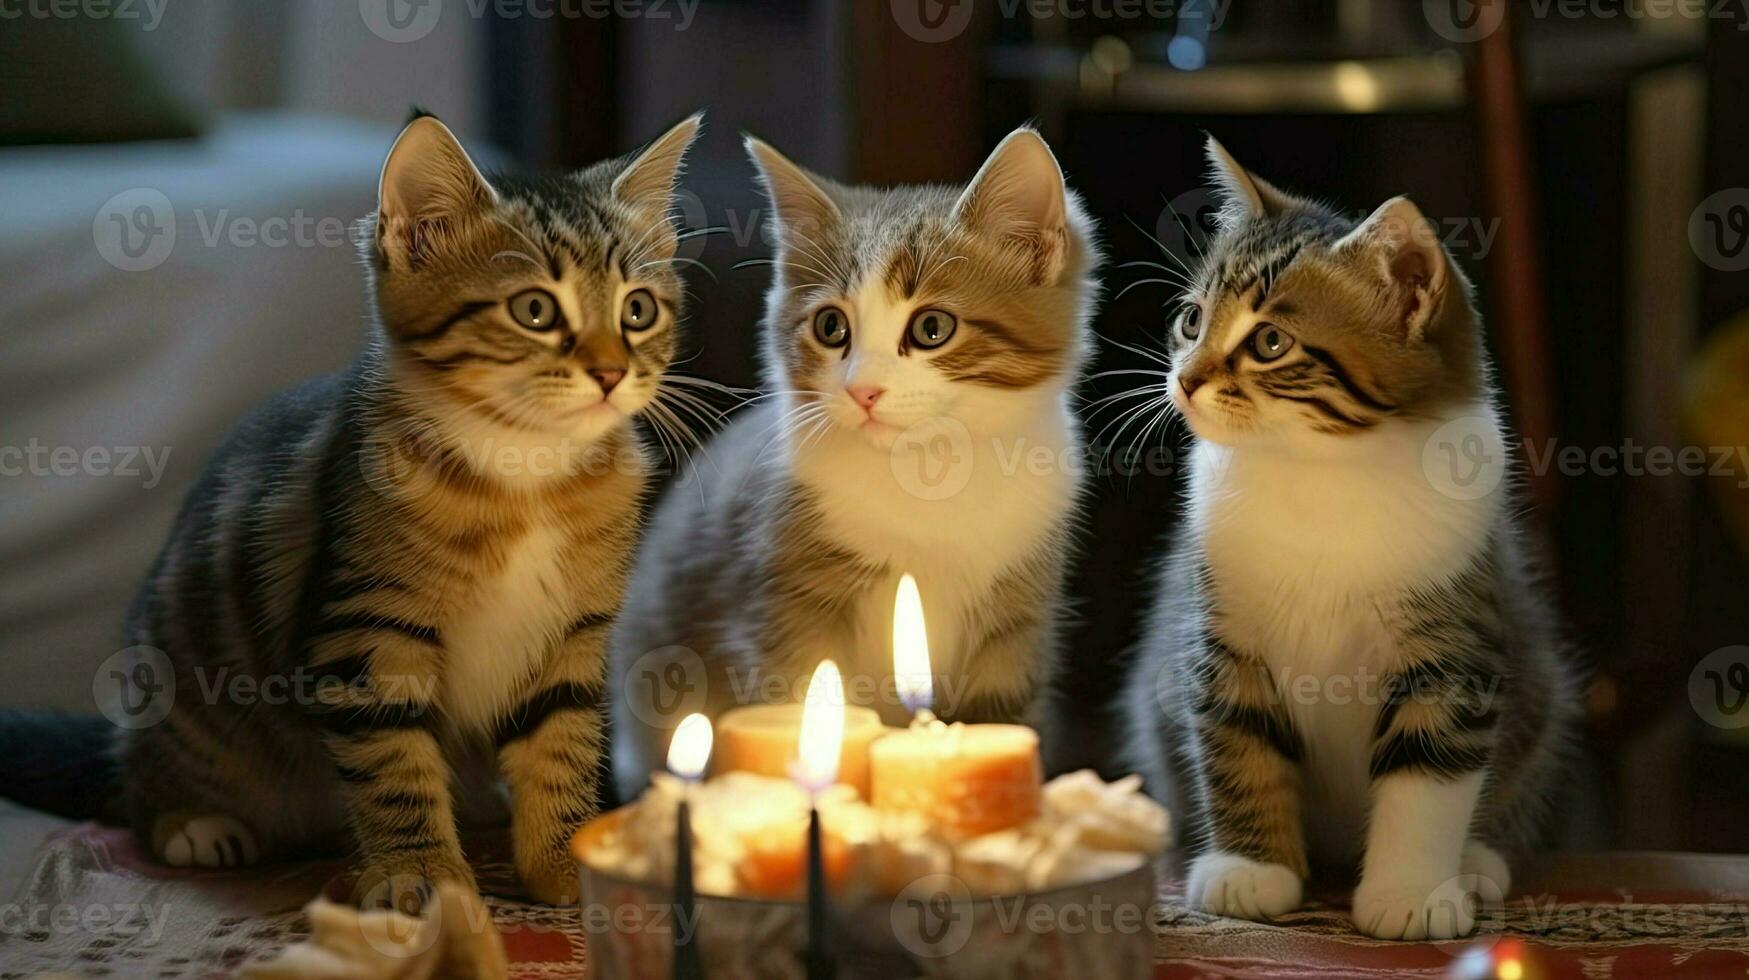 Cats celebrate birthdays using cake and birthday candles AI Generative photo